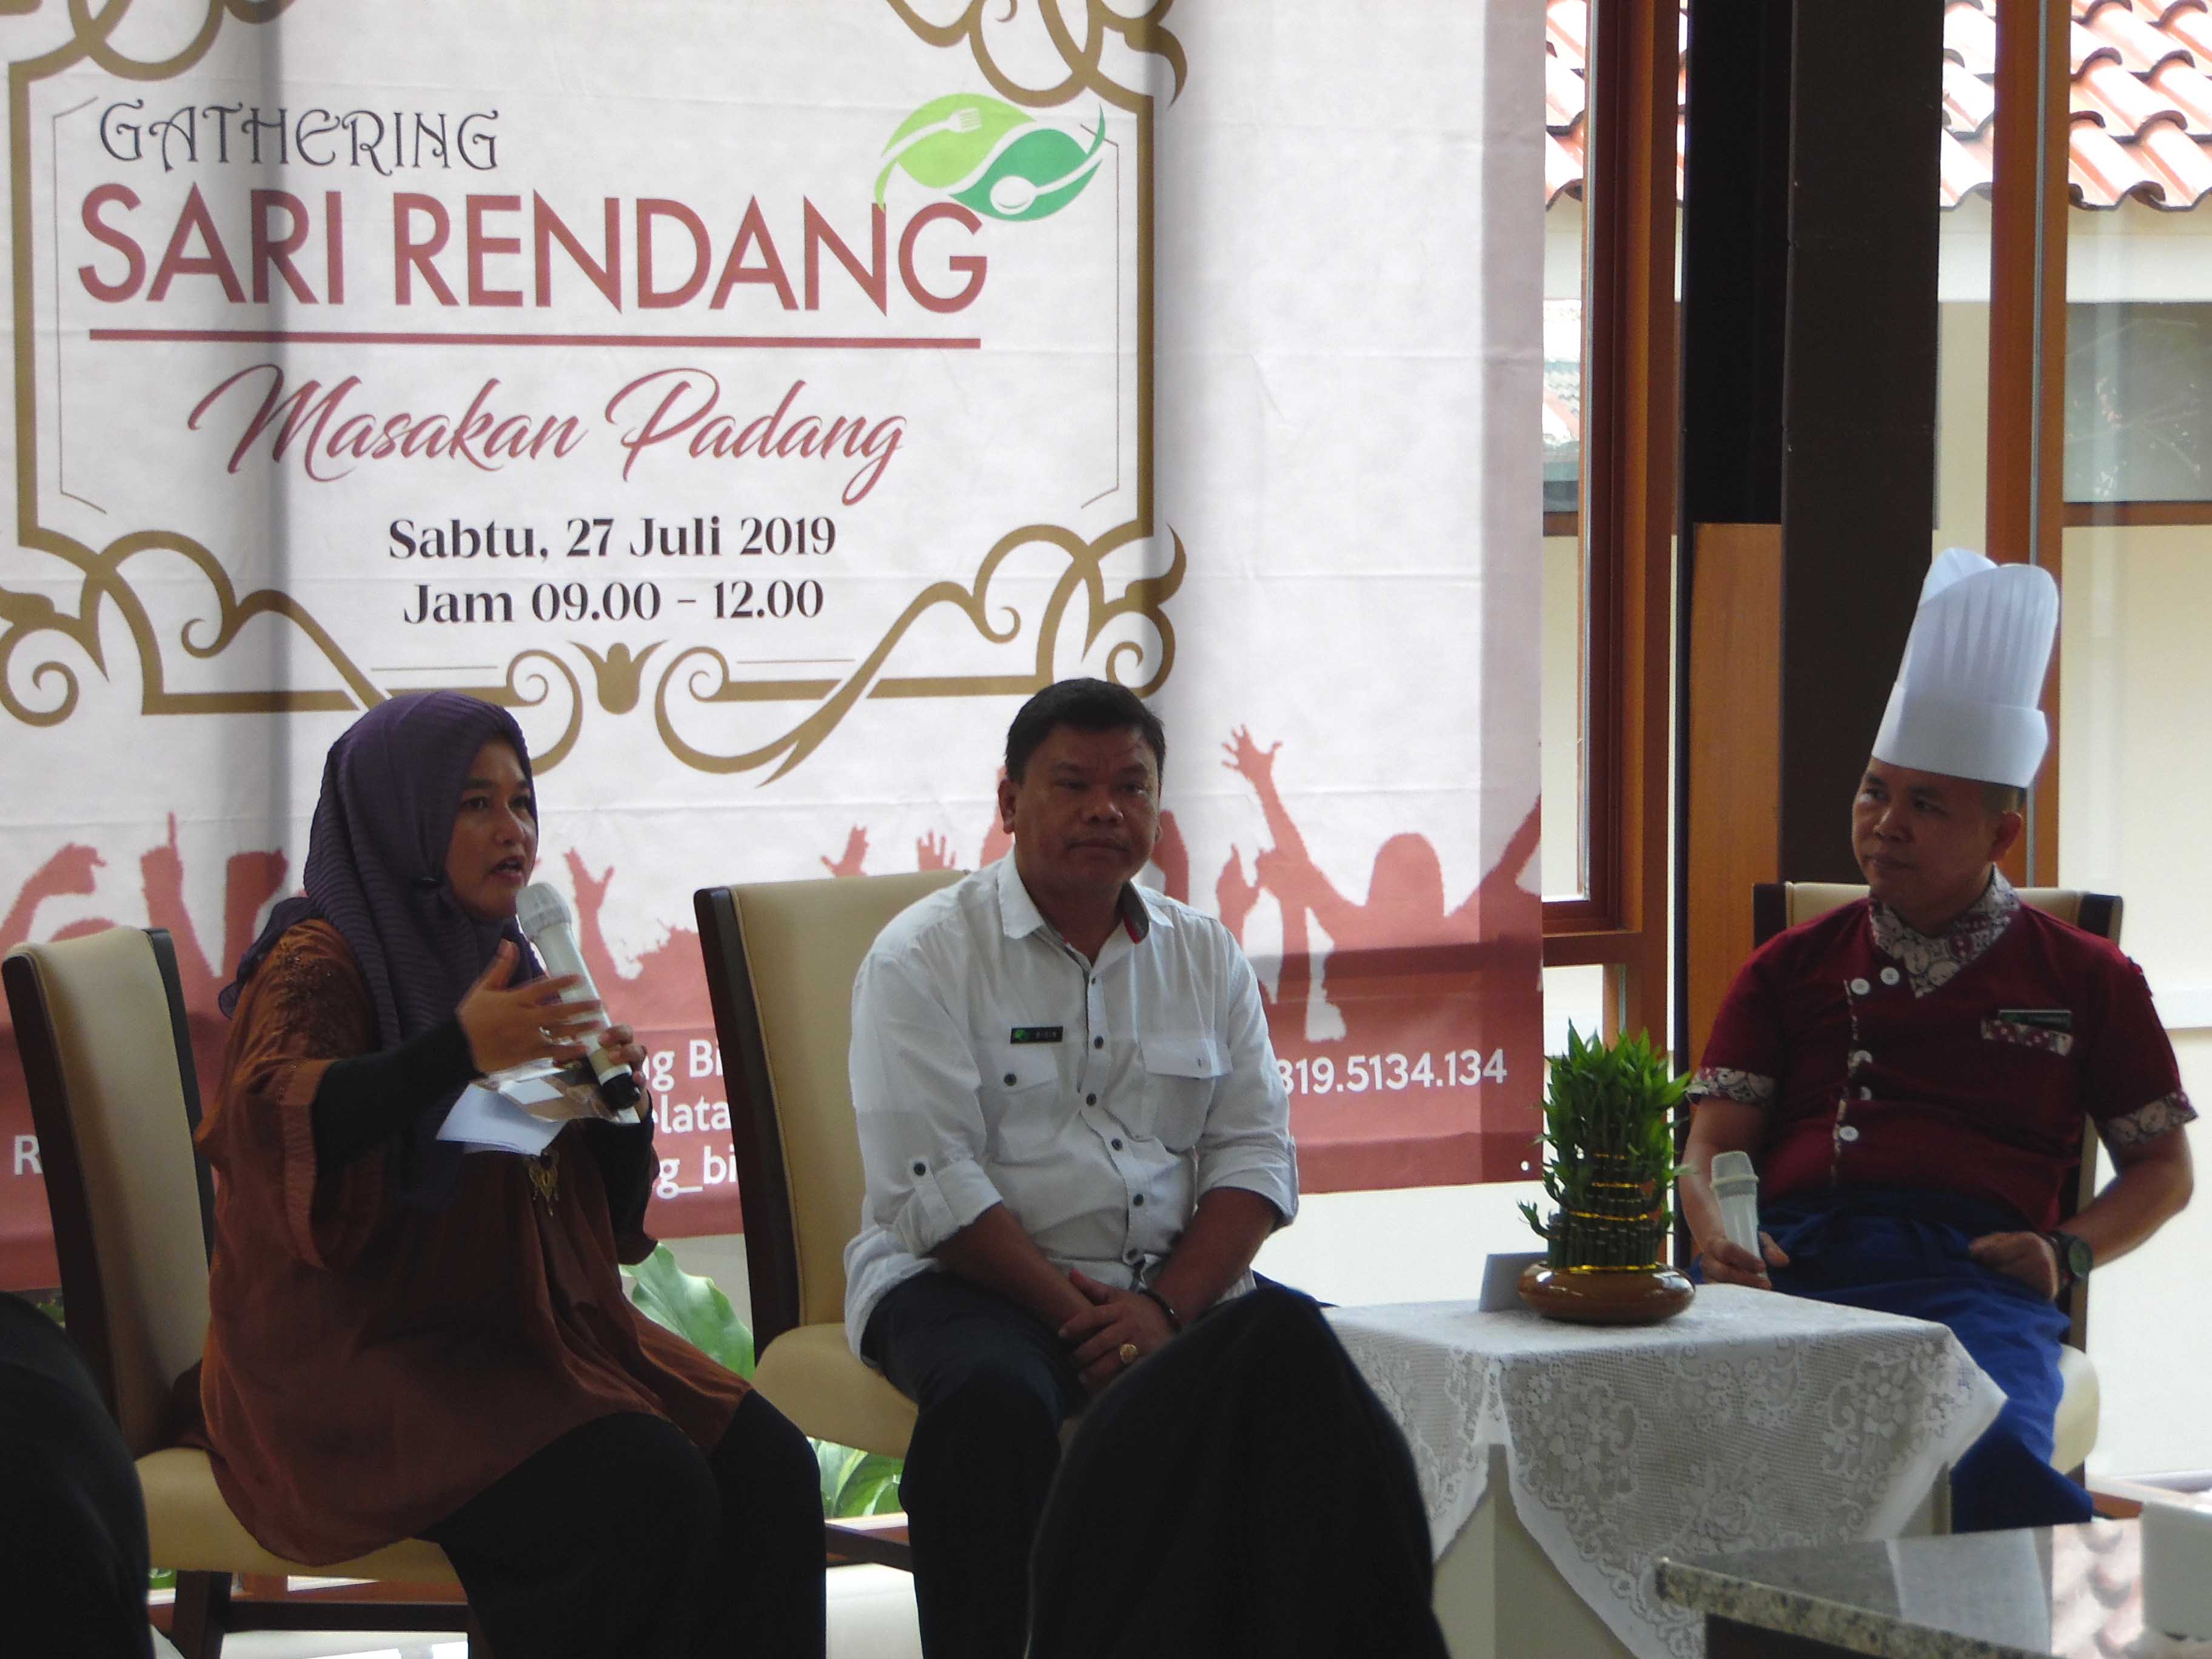 Resto Sari Rendang Adakan Gathering Dengan Komunitas Warga Bintaro